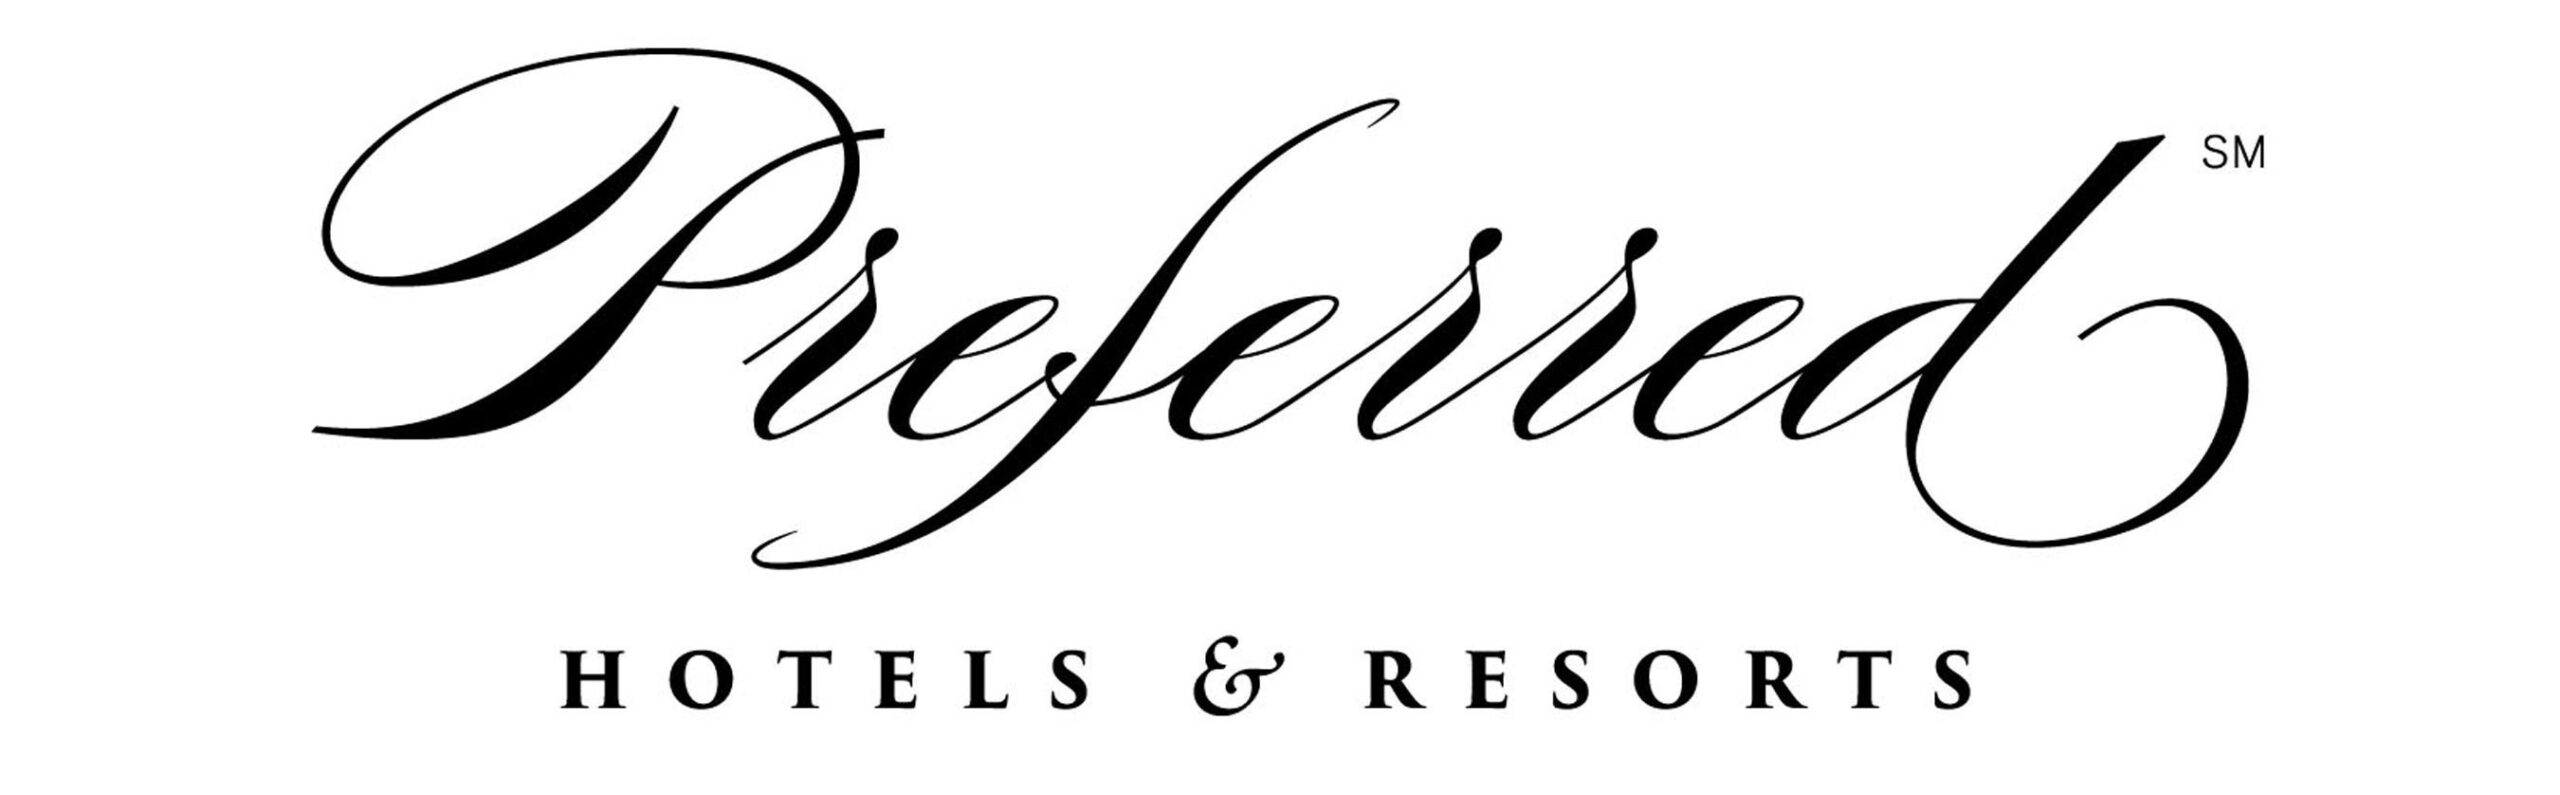 preferred hotels and resorts logo